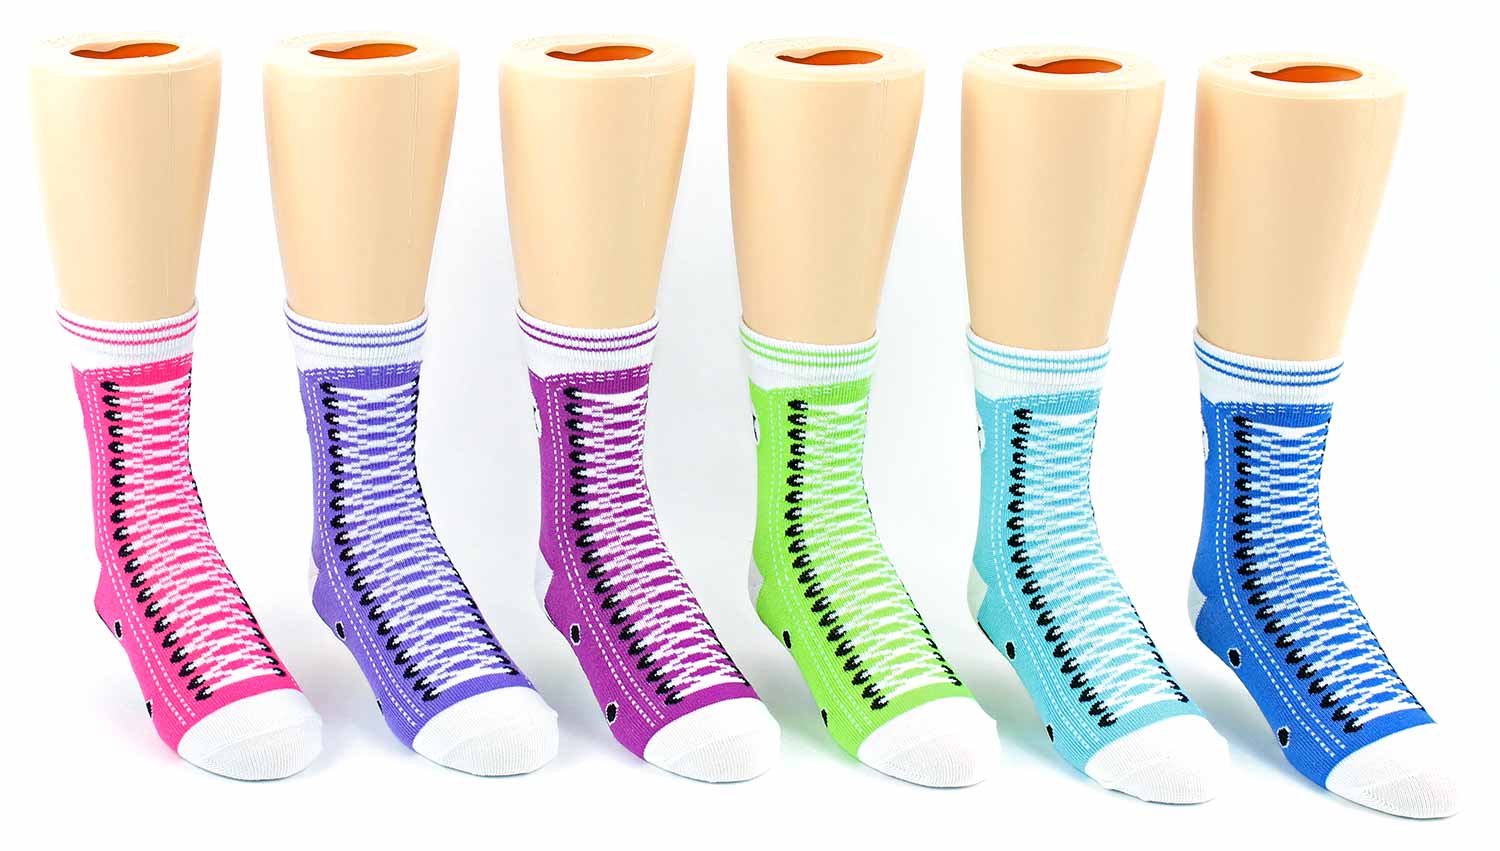 Boy's & Girl's Novelty Crew Socks - SNEAKER Print - Size 4-6